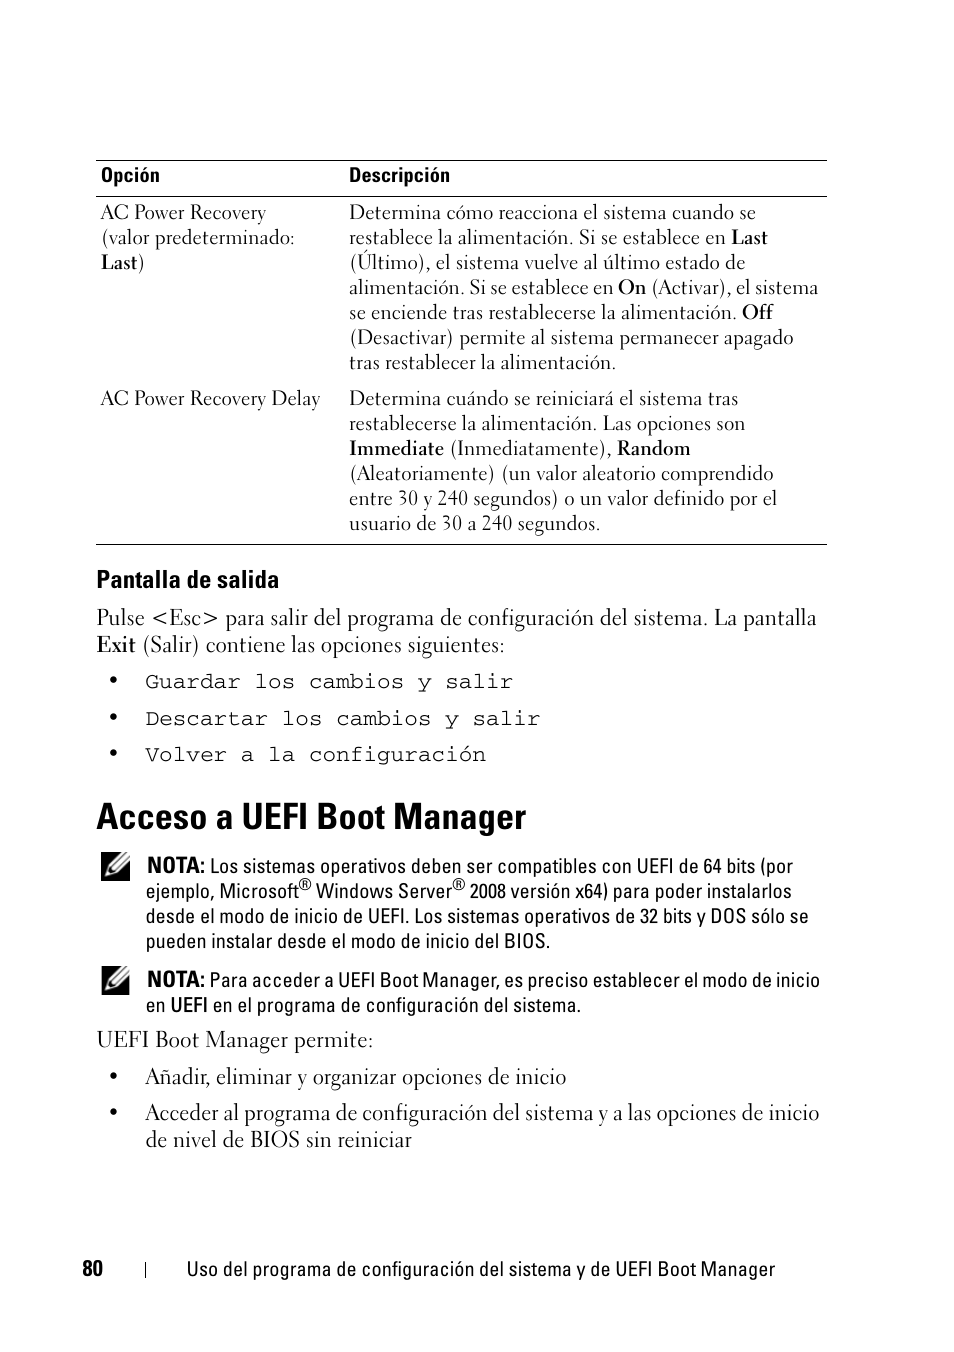 Pantalla de salida, Acceso a uefi boot manager | Dell POWEREDGE R710 Manual del usuario | Página 80 / 232